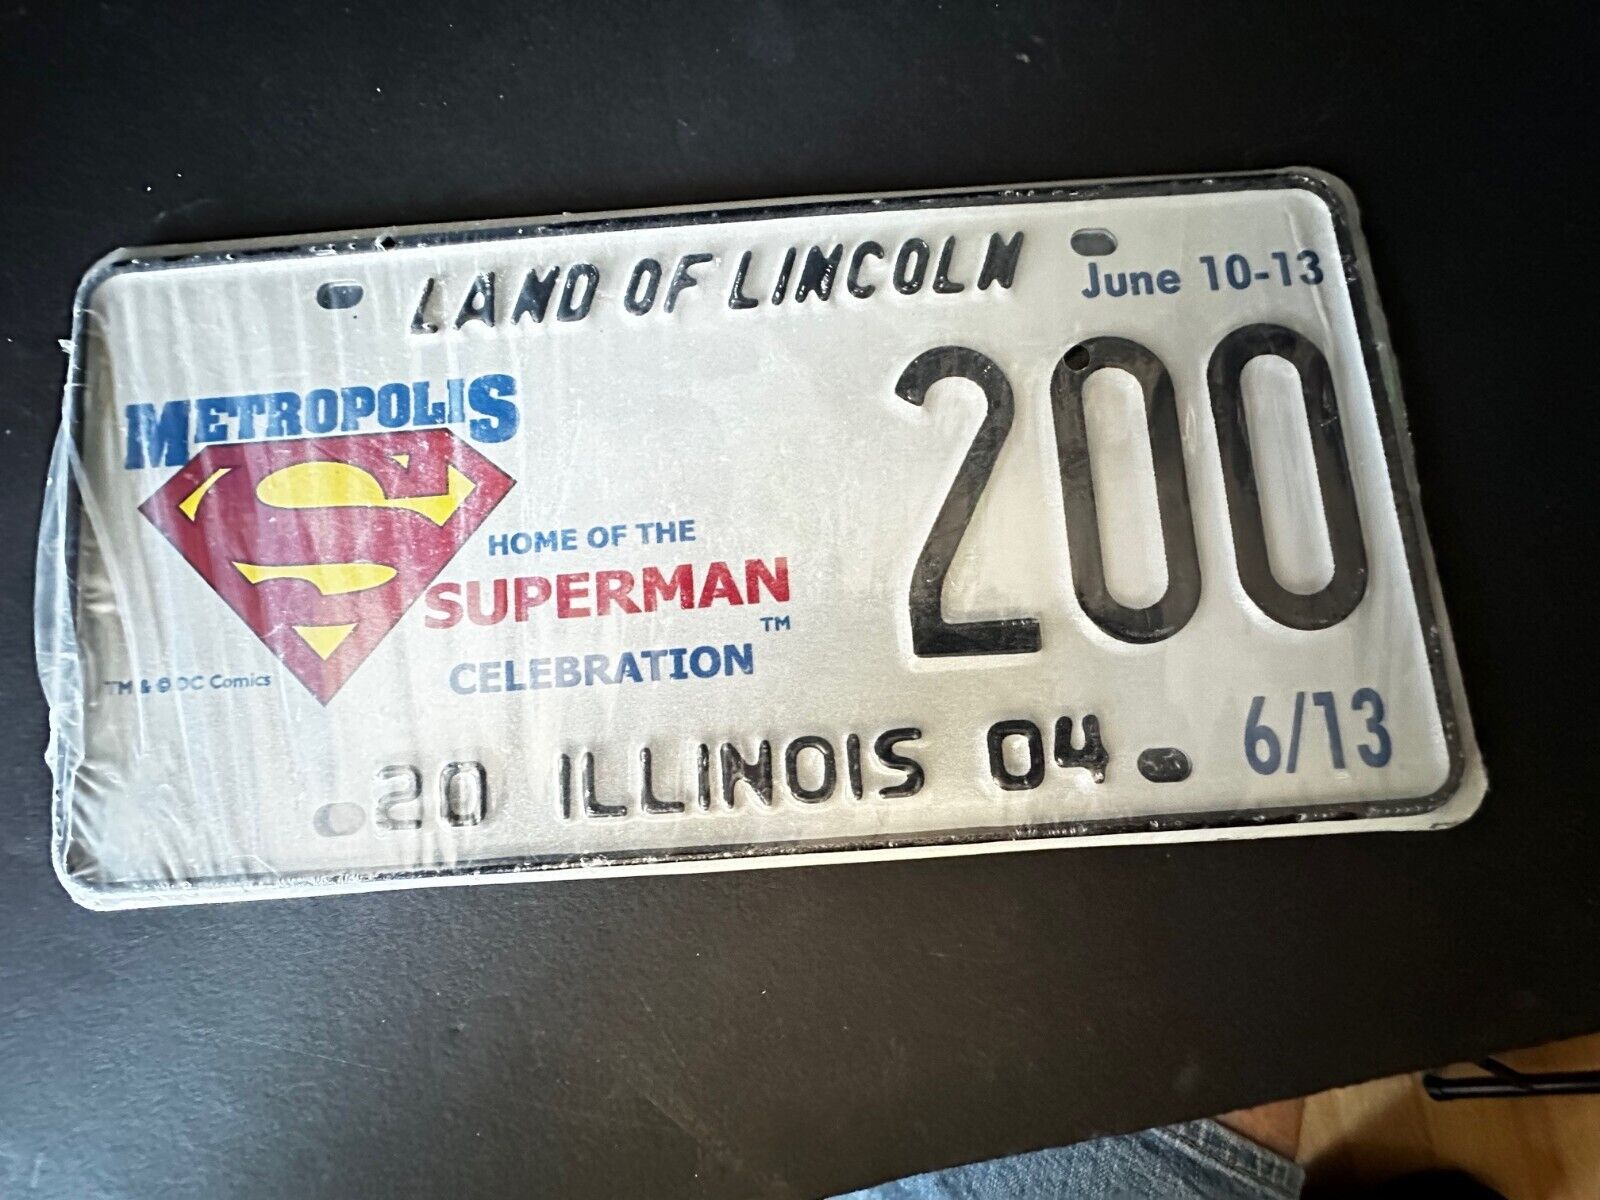 Illinois special event license plates Superman Celebration